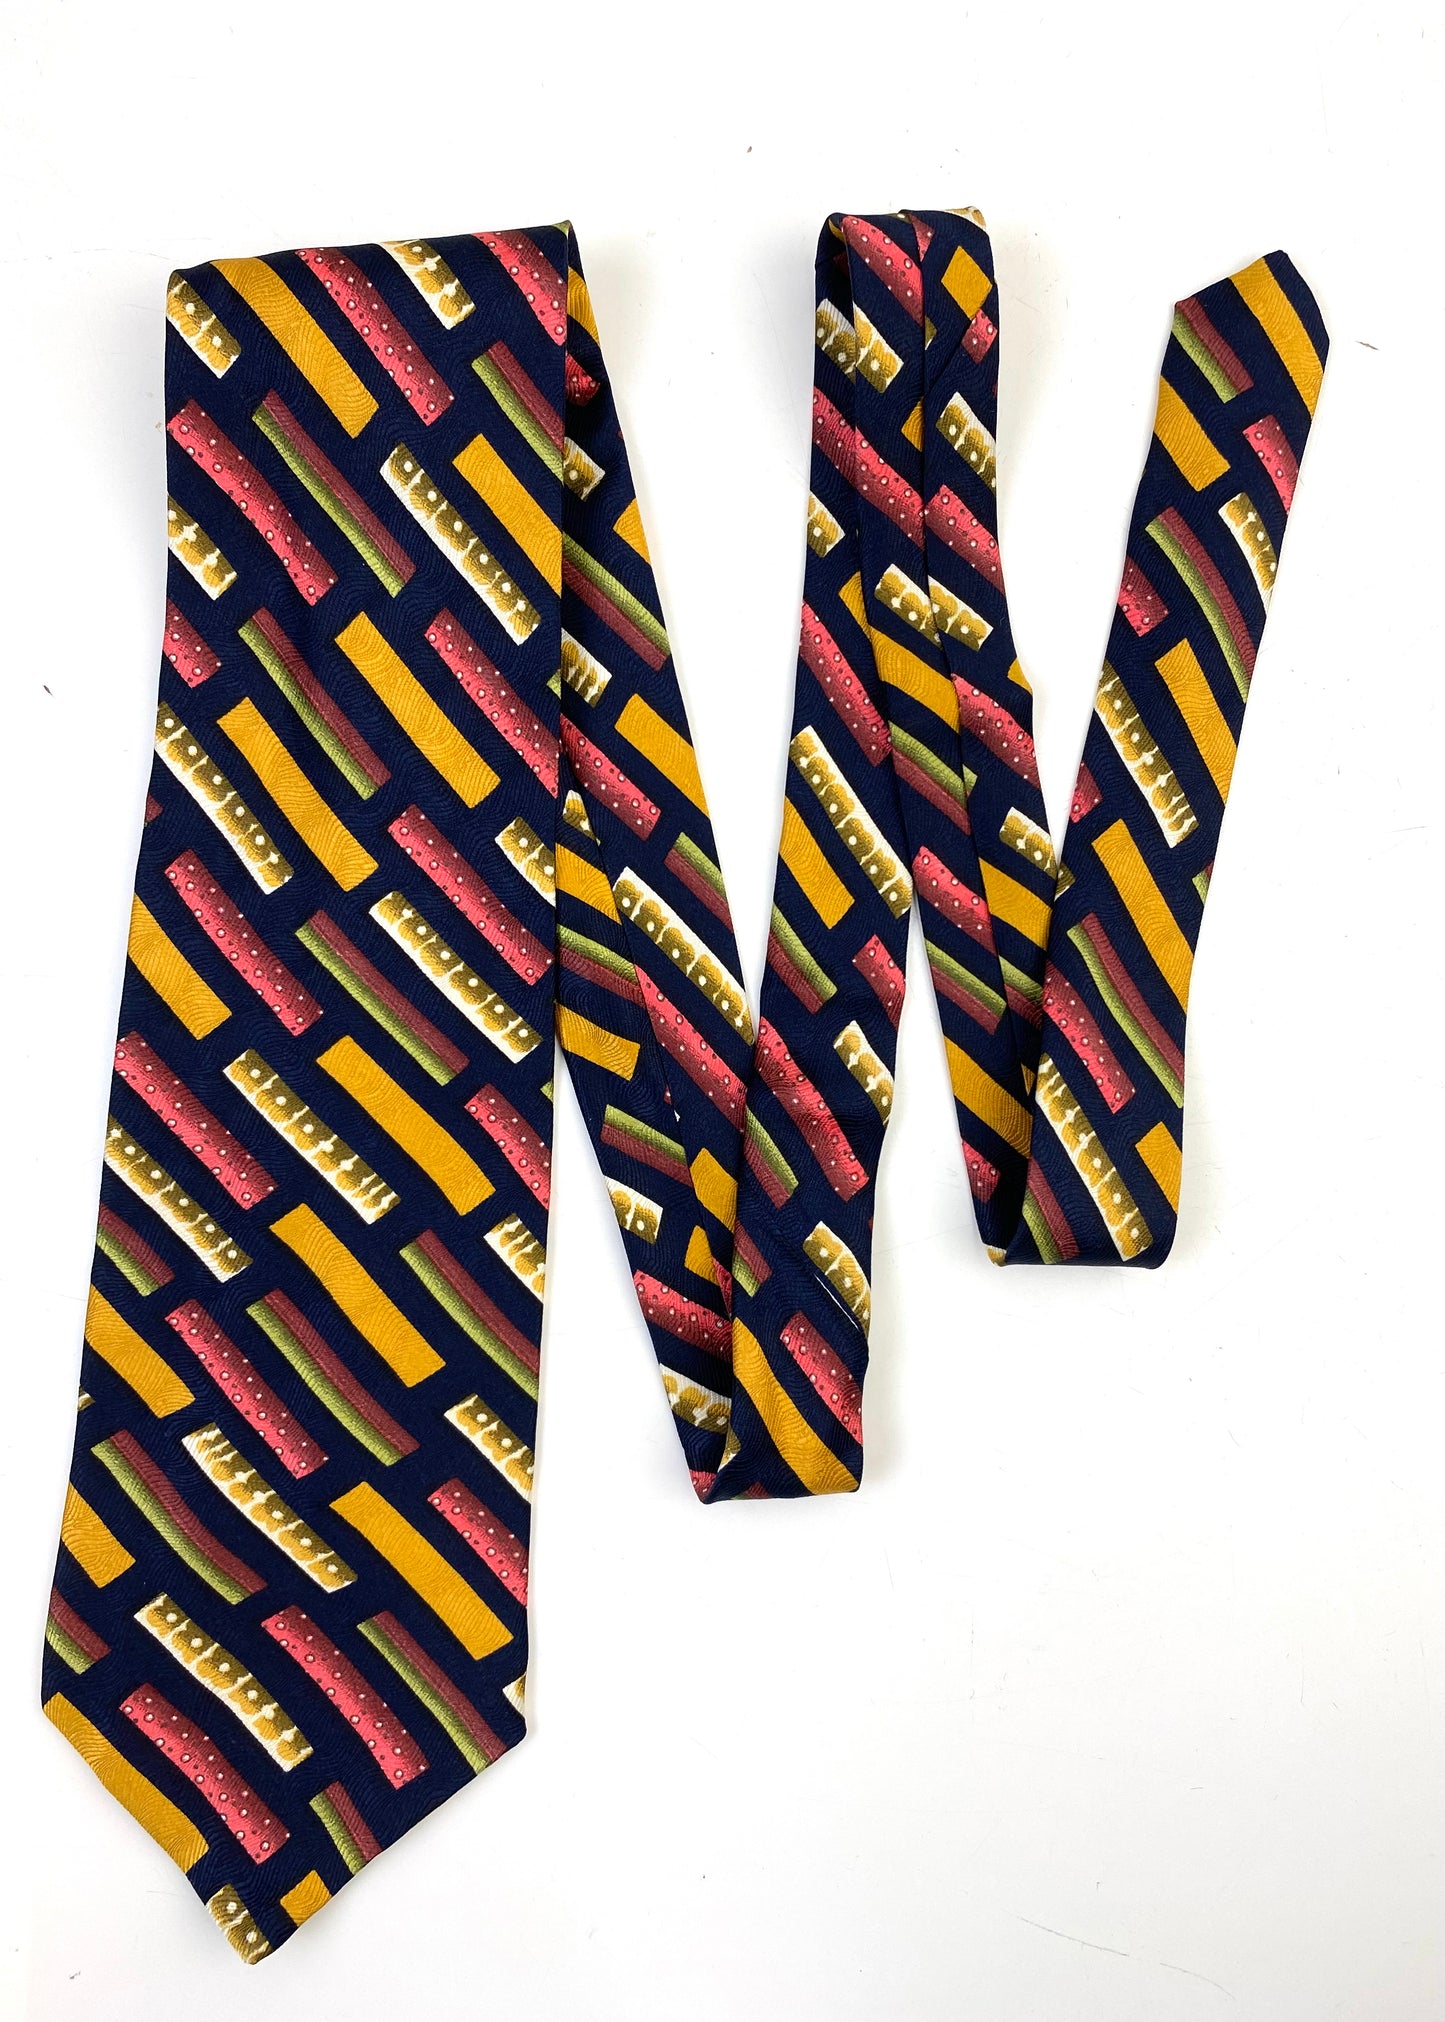 90s Deadstock Silk Necktie, Men's Vintage Gold/Red/Navy Geometric Pattern Tie, NOS